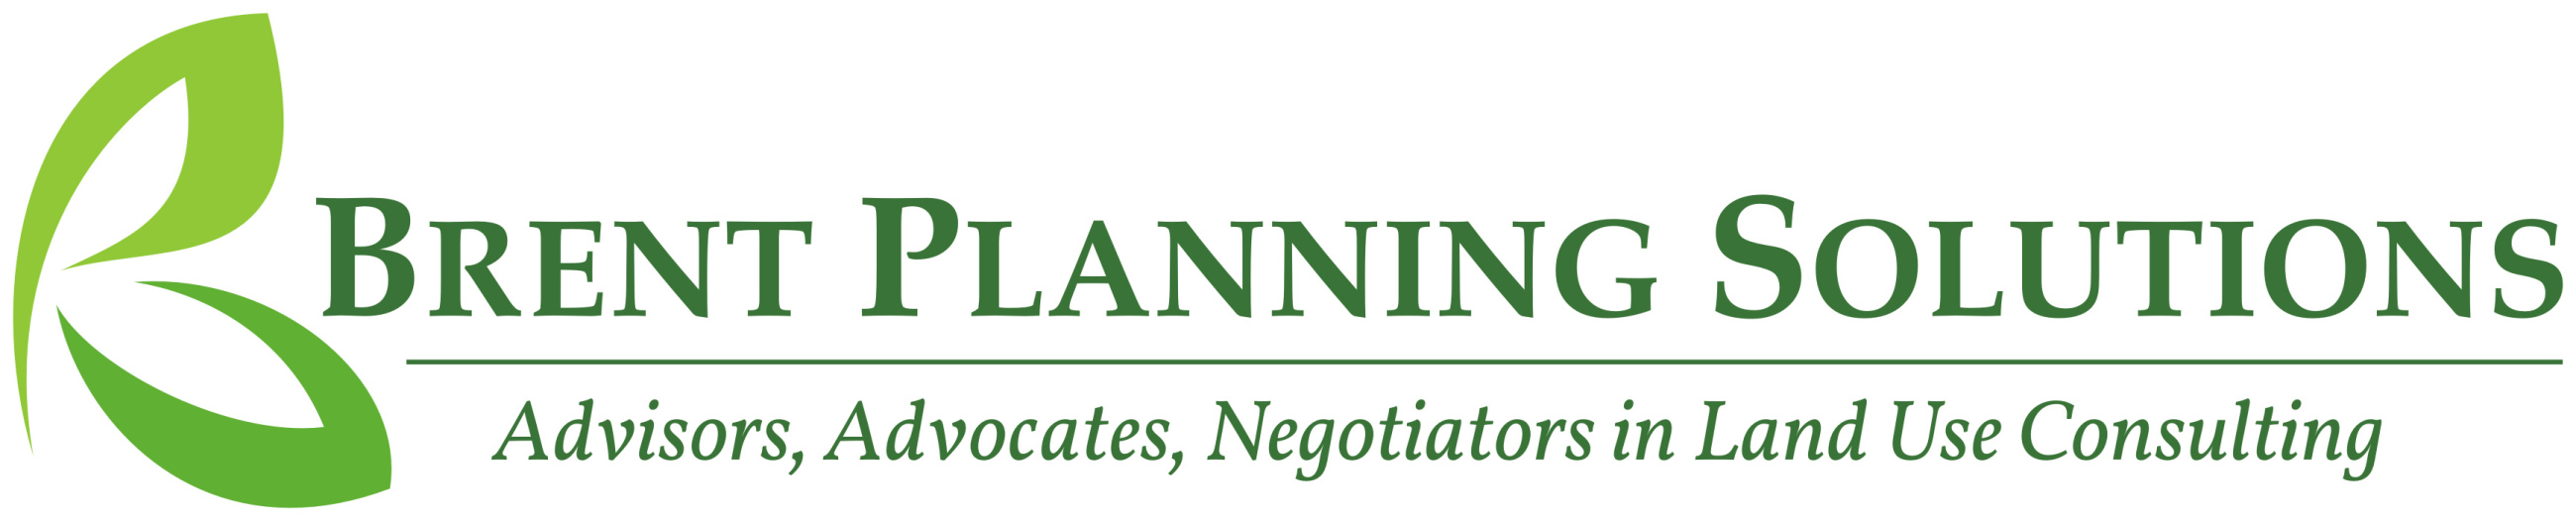 Brent Planning Solutions Logo